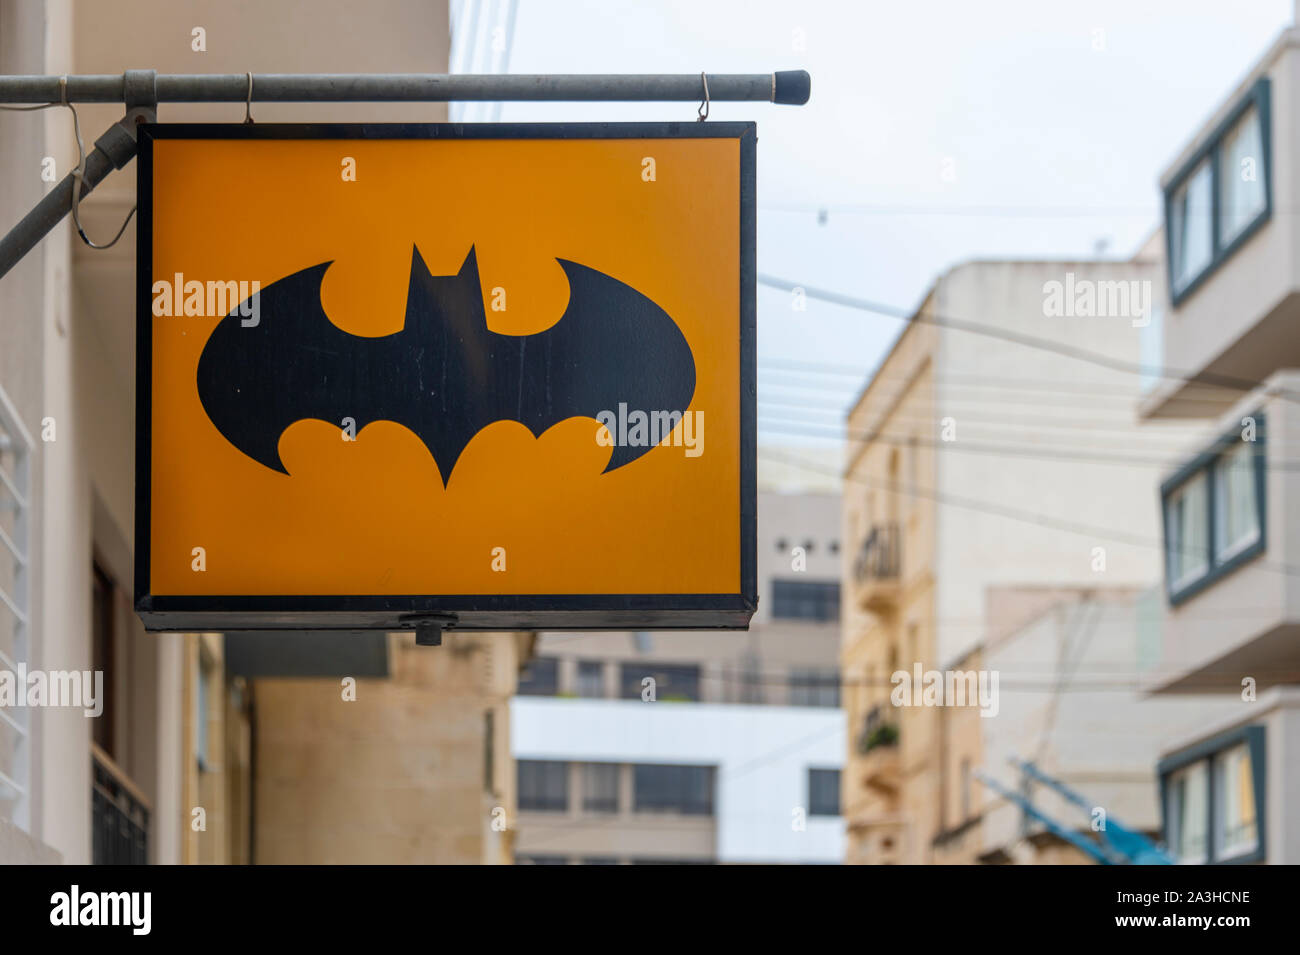 illuminated Batman symbol above a shop Stock Photo